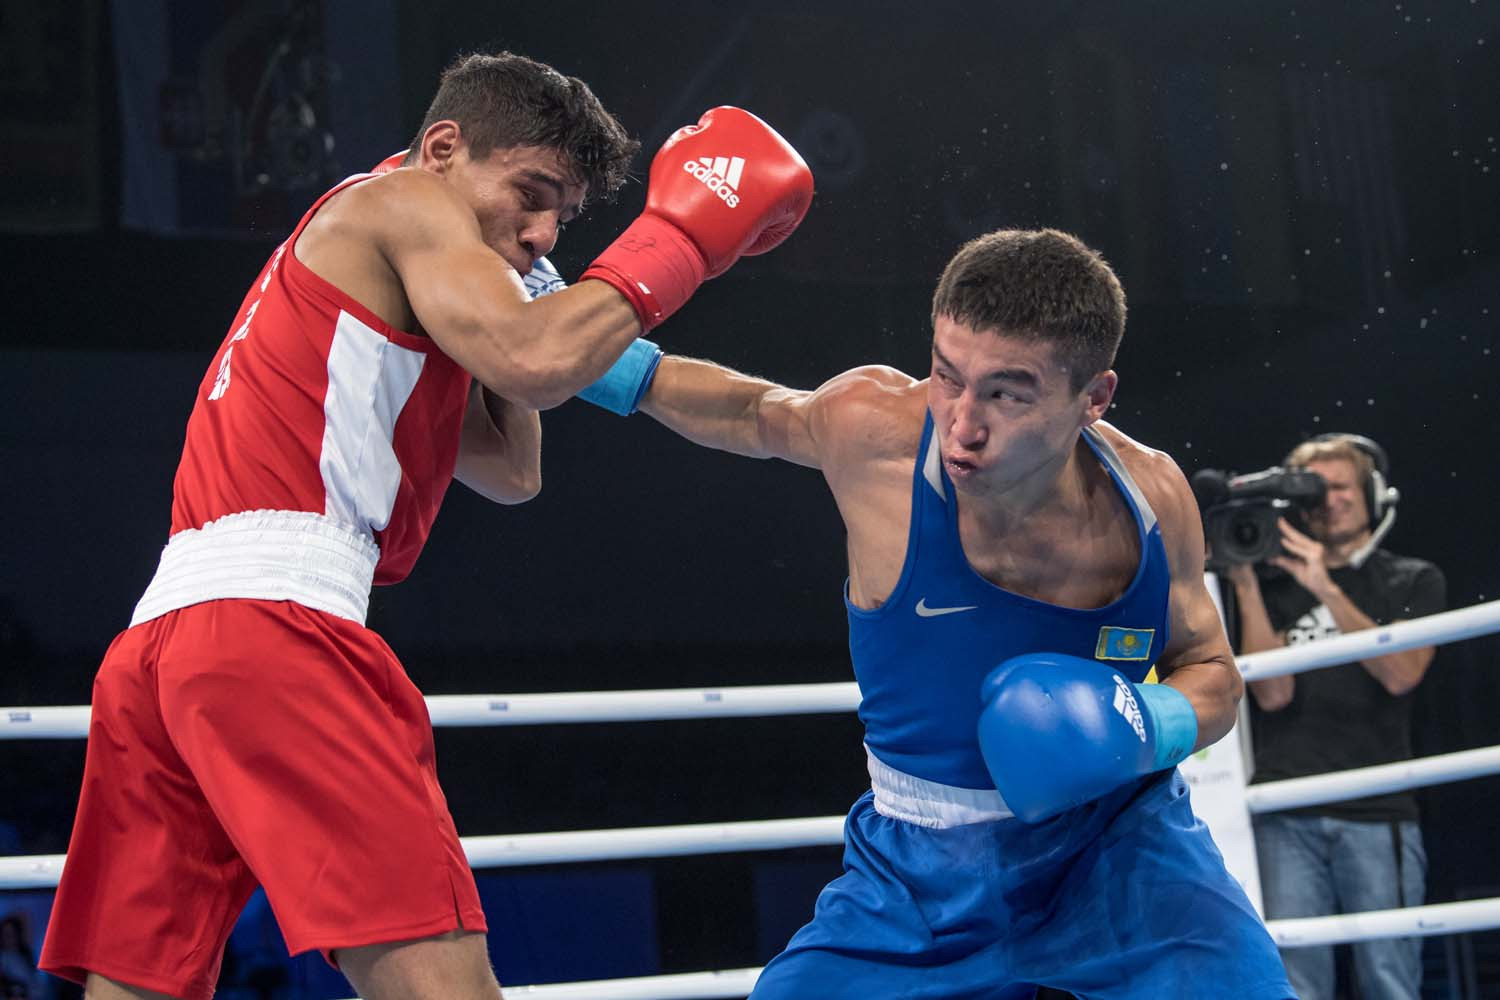 Kazakhstan's Kairat Yeraliyev overcame top-seeded bantamweight Murodjon Akhmadaliev of Uzbekistan to reach the quarter-finals ©AIBA